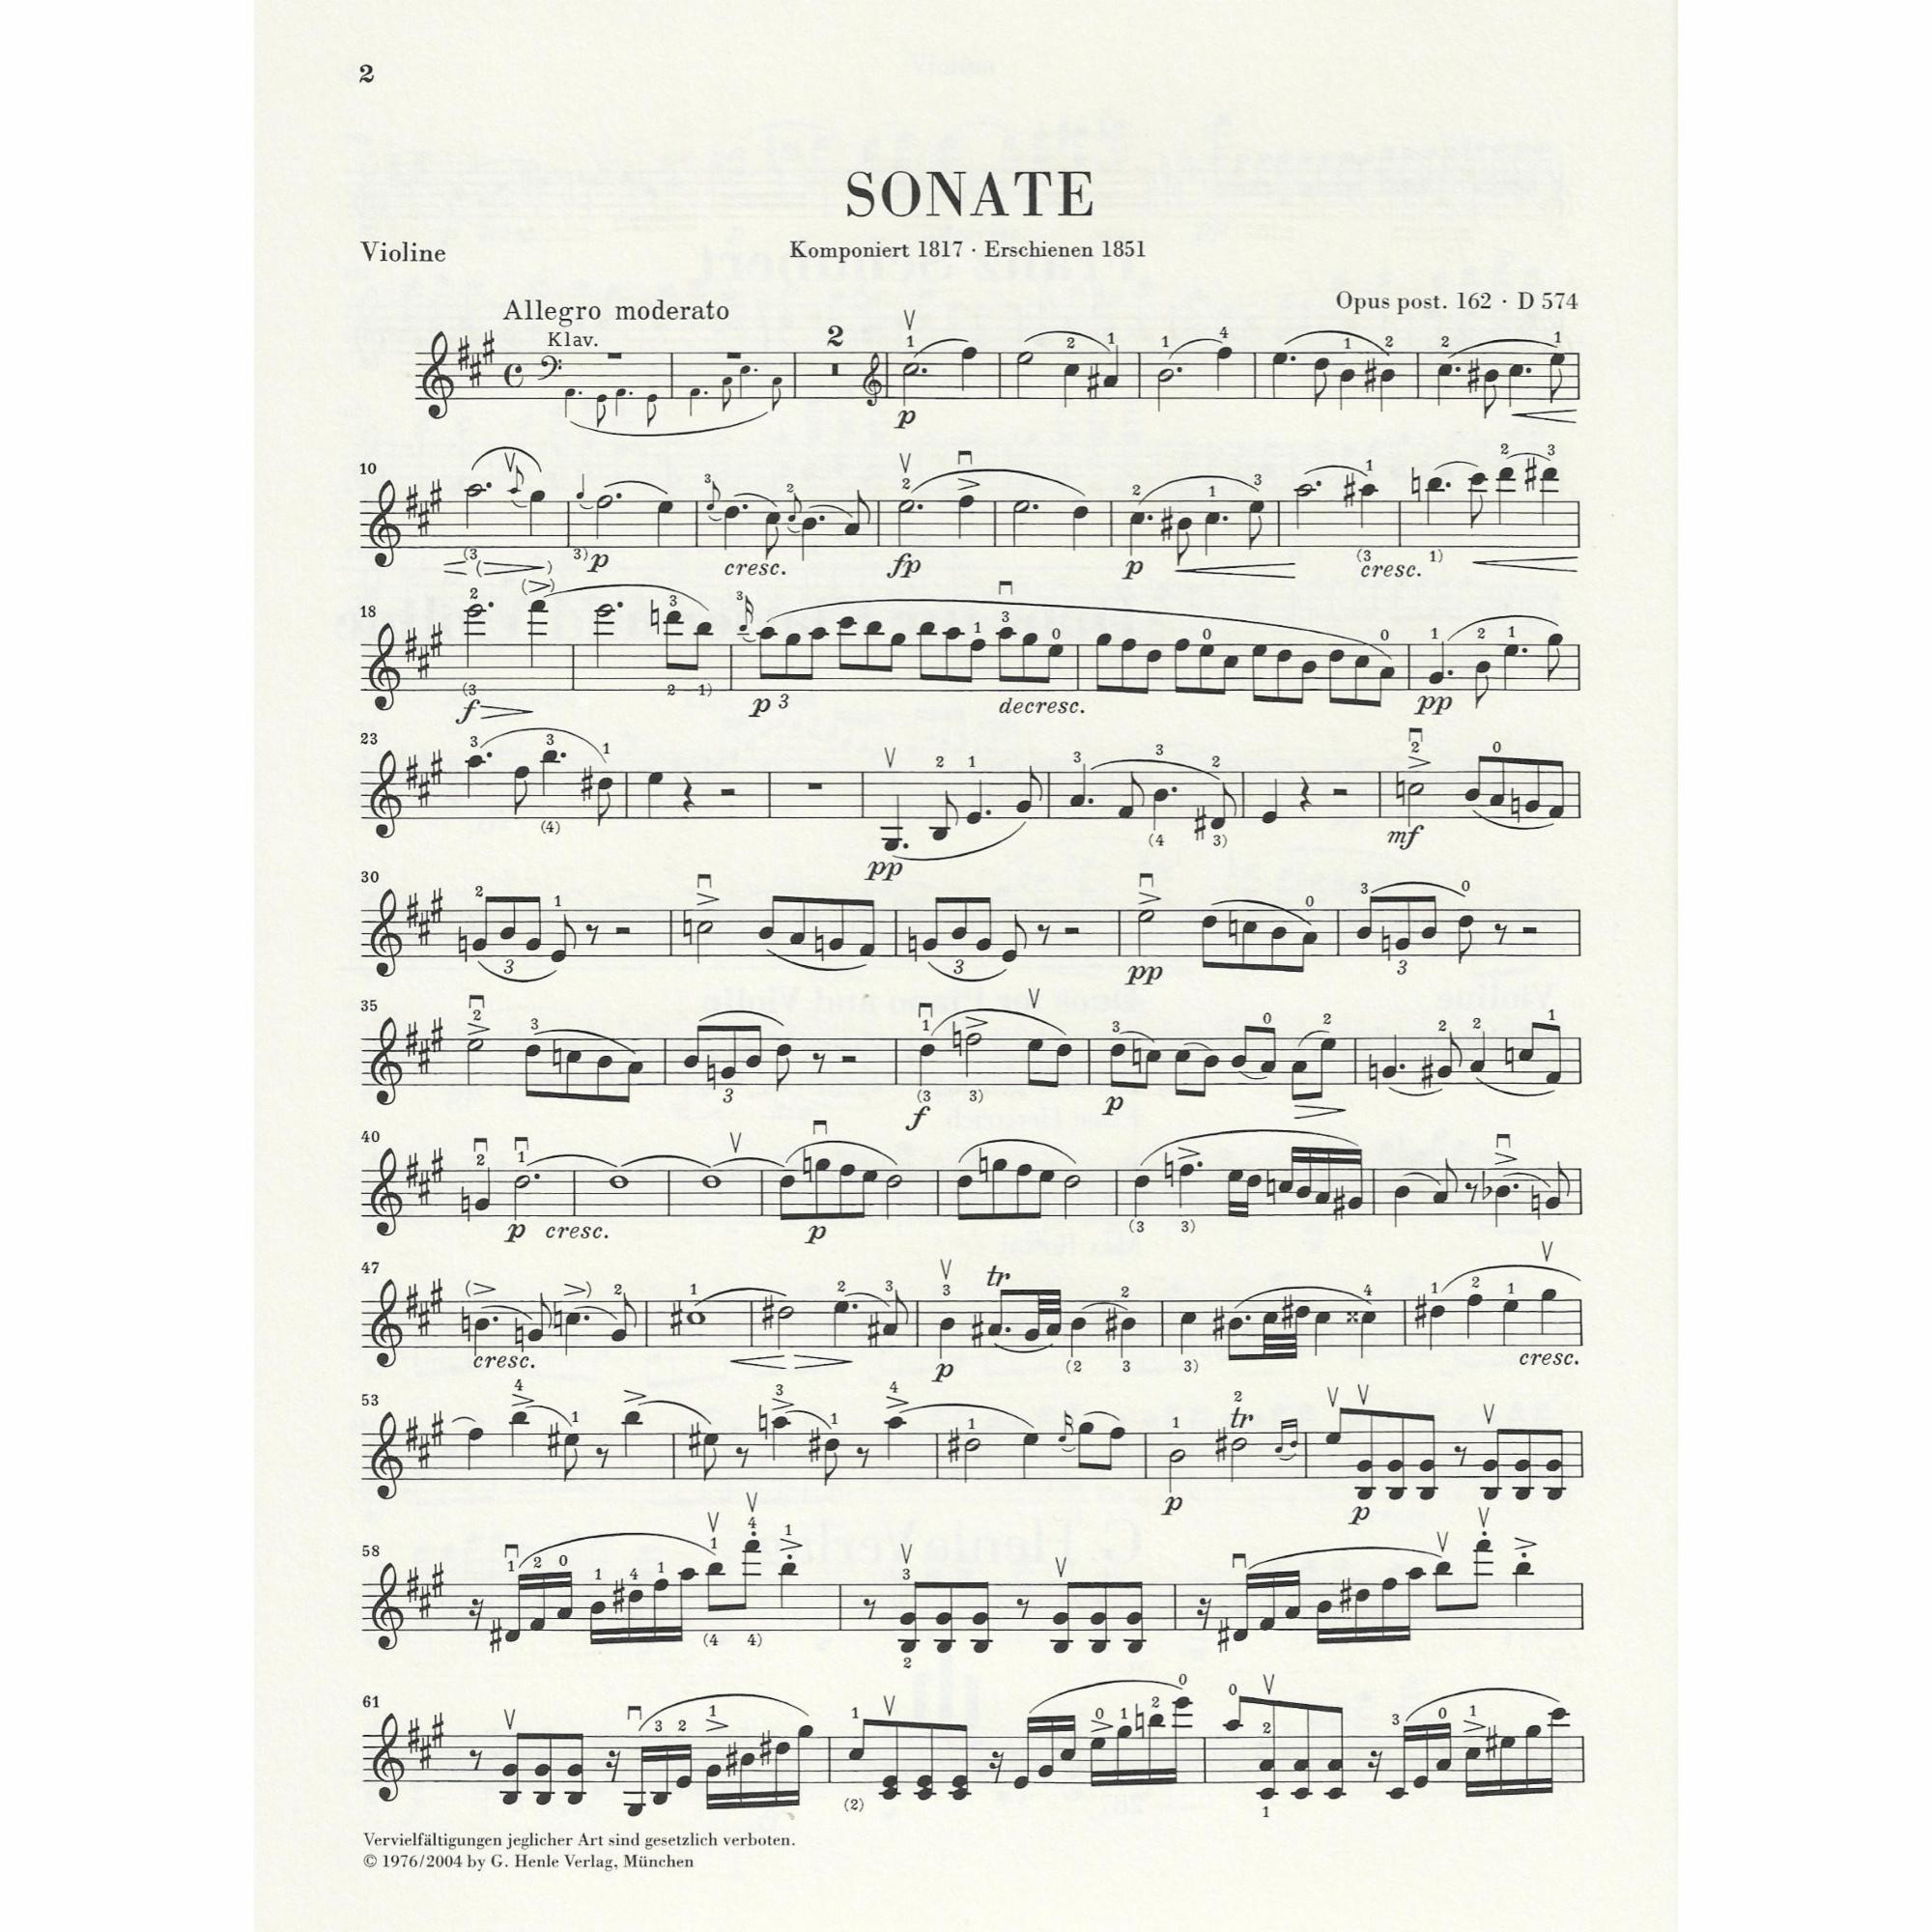 Sample: Marked Violin Part (D. 574)